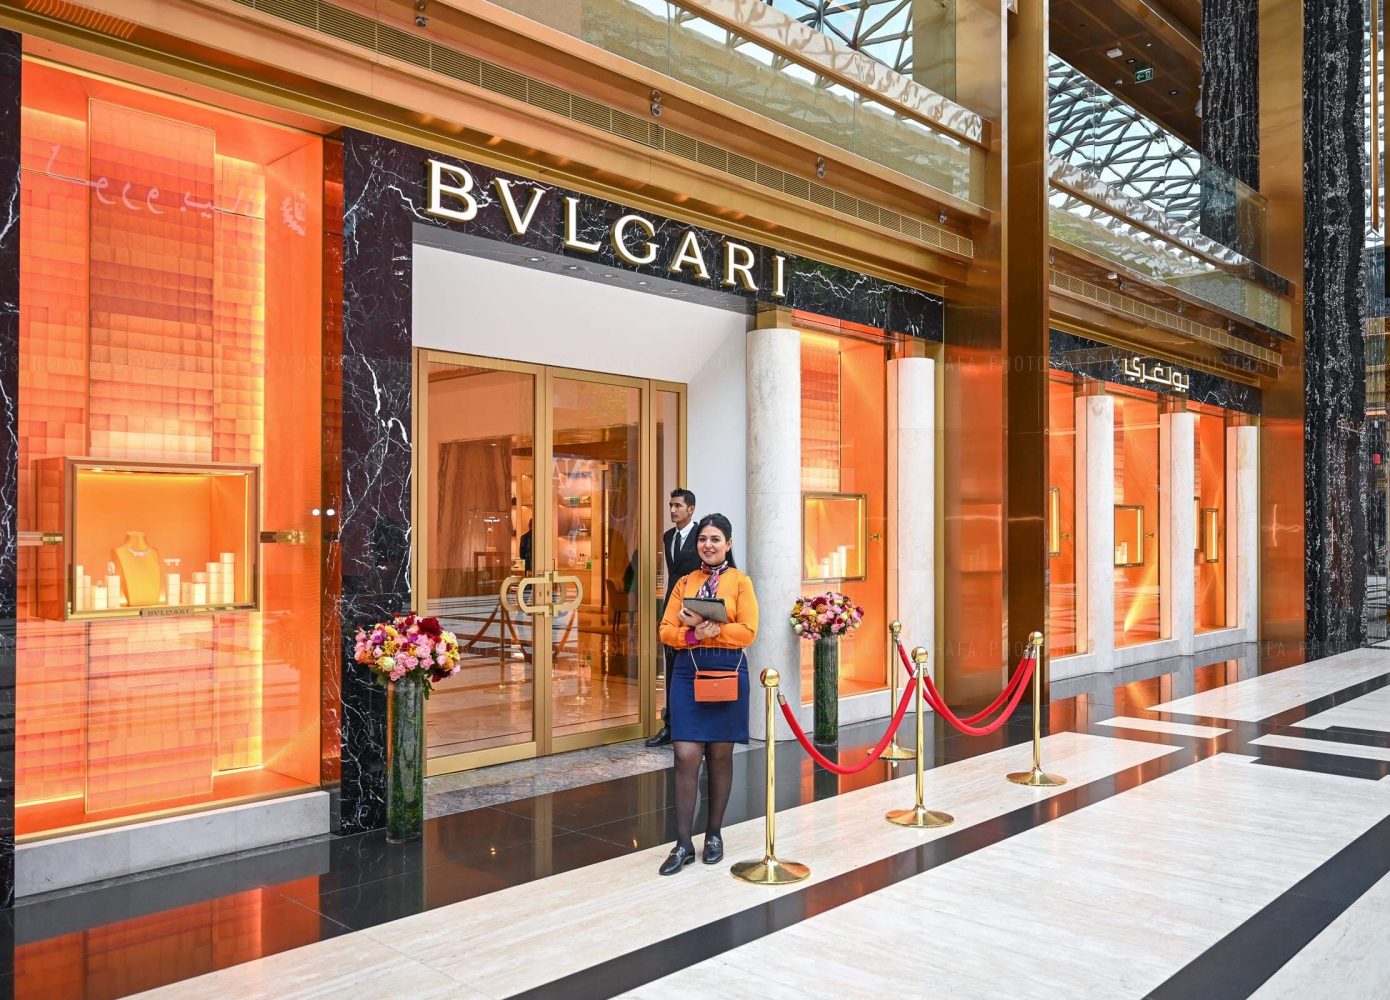 Bvlgari Bulgari Retail Store Opening Kuwait Avenues Mall Promotional Event Photography Fashion Brands Outlet Pop up Exhibition Photographer Dubai Abu Dhabi Riyadh UAE 08